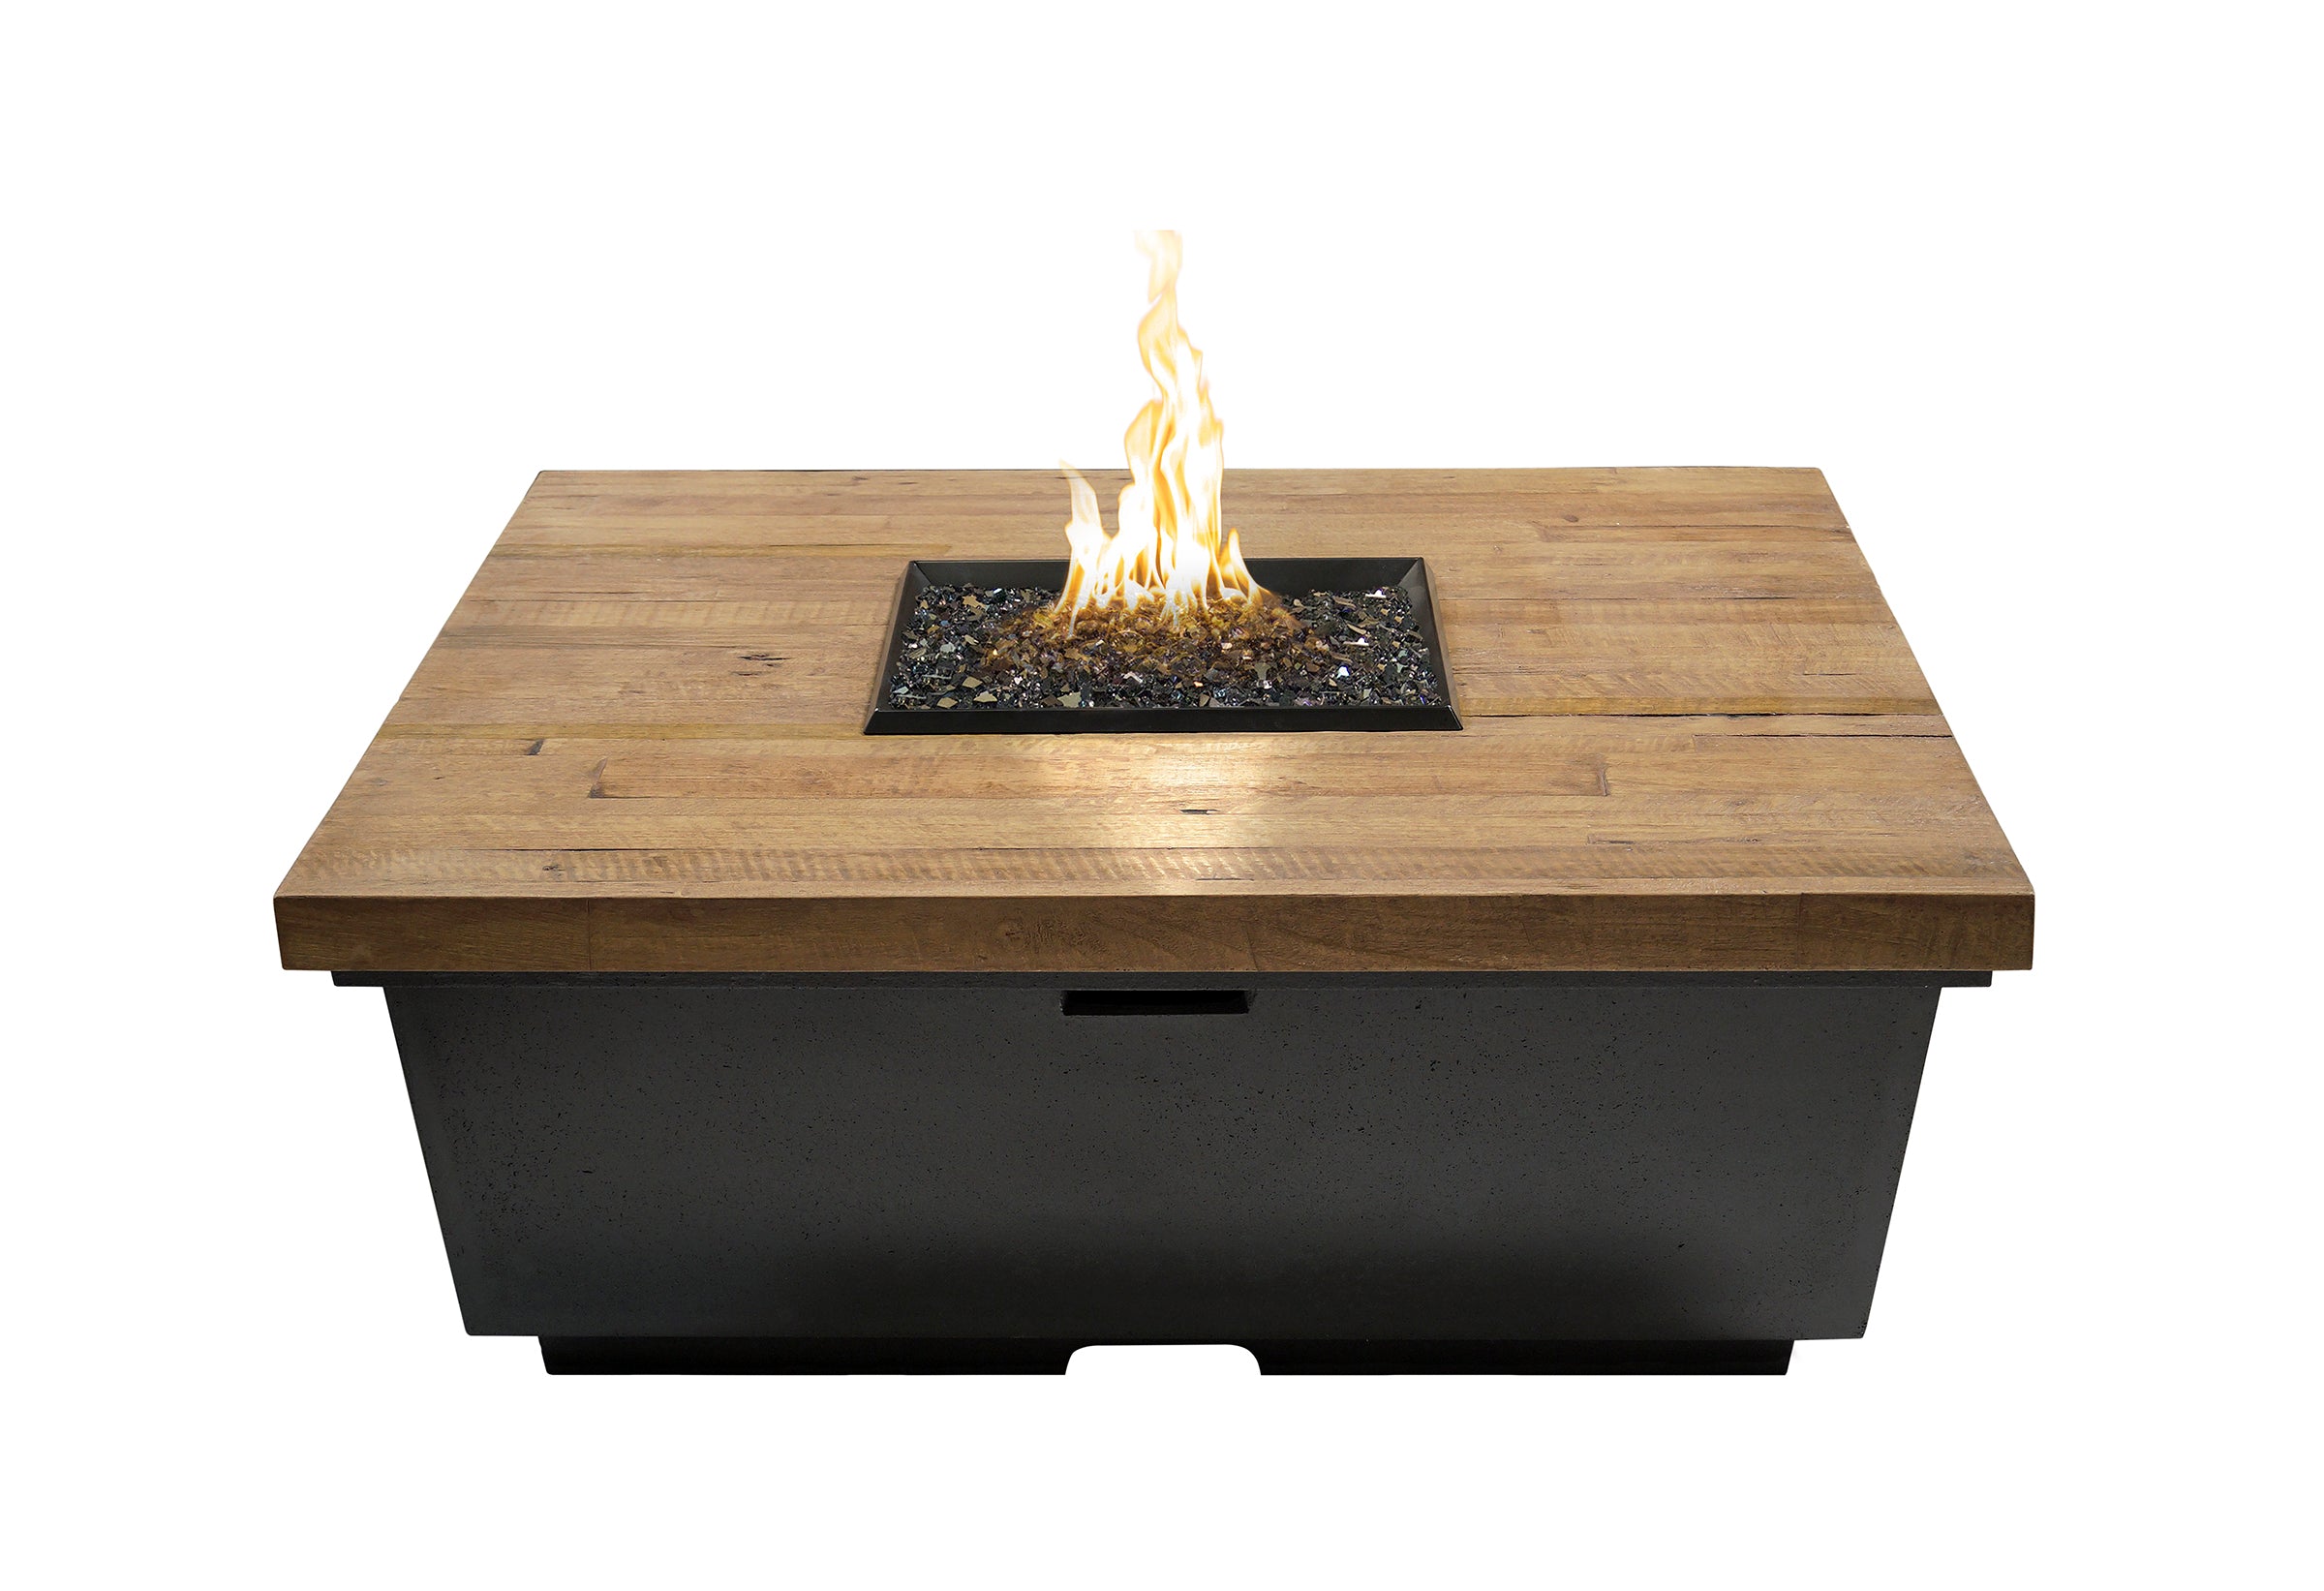 44" Contempo Square Fire table  by American Fyre Design